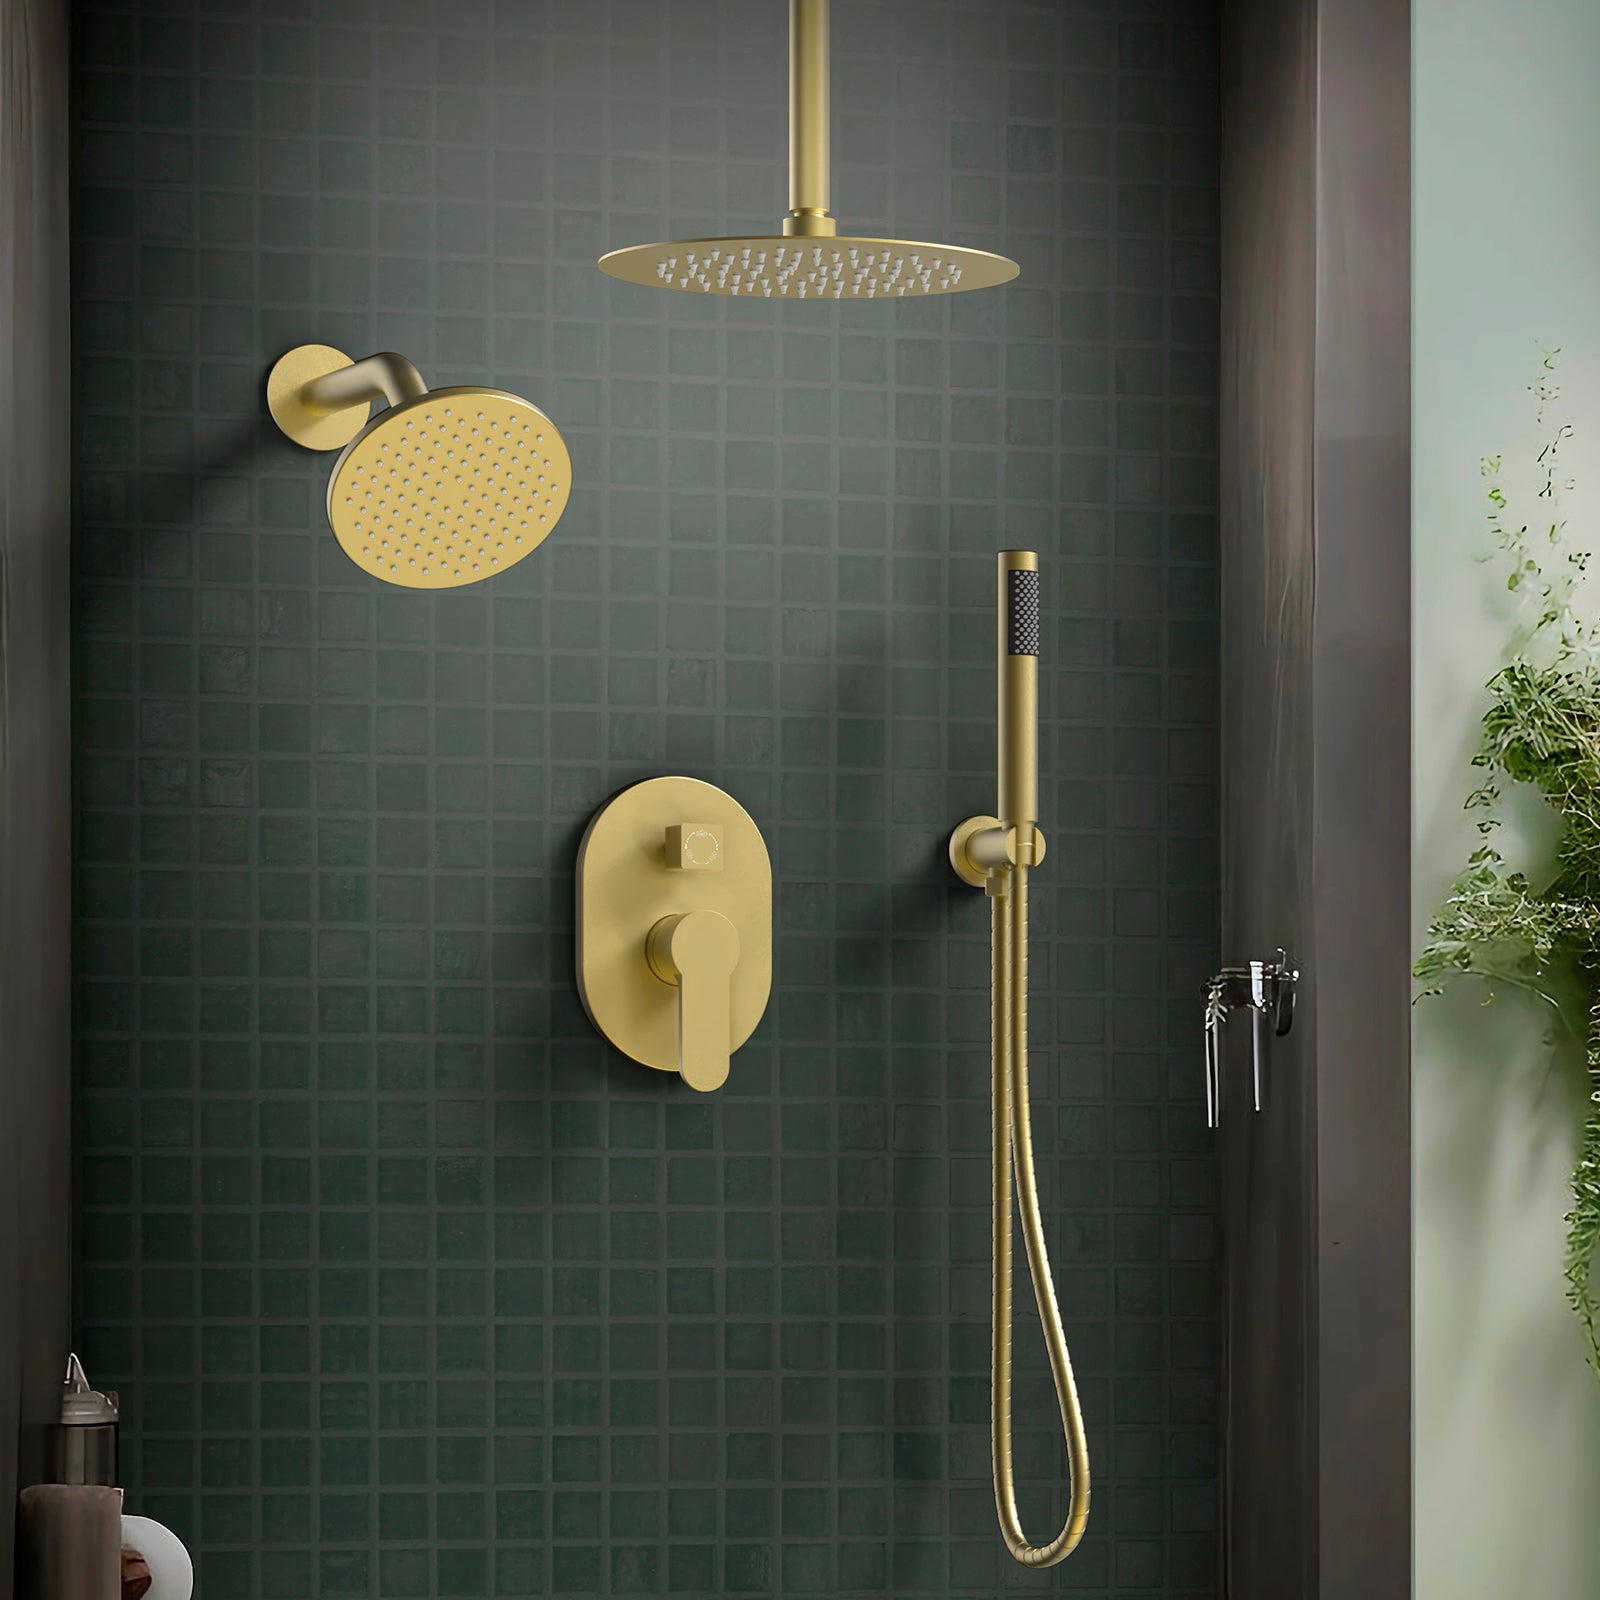 EVERSTEIN Dual Shower Heads System: Brushed Gold 10" Round Showerhead High-Pressure Luxury Rainfall Shower Fixtures